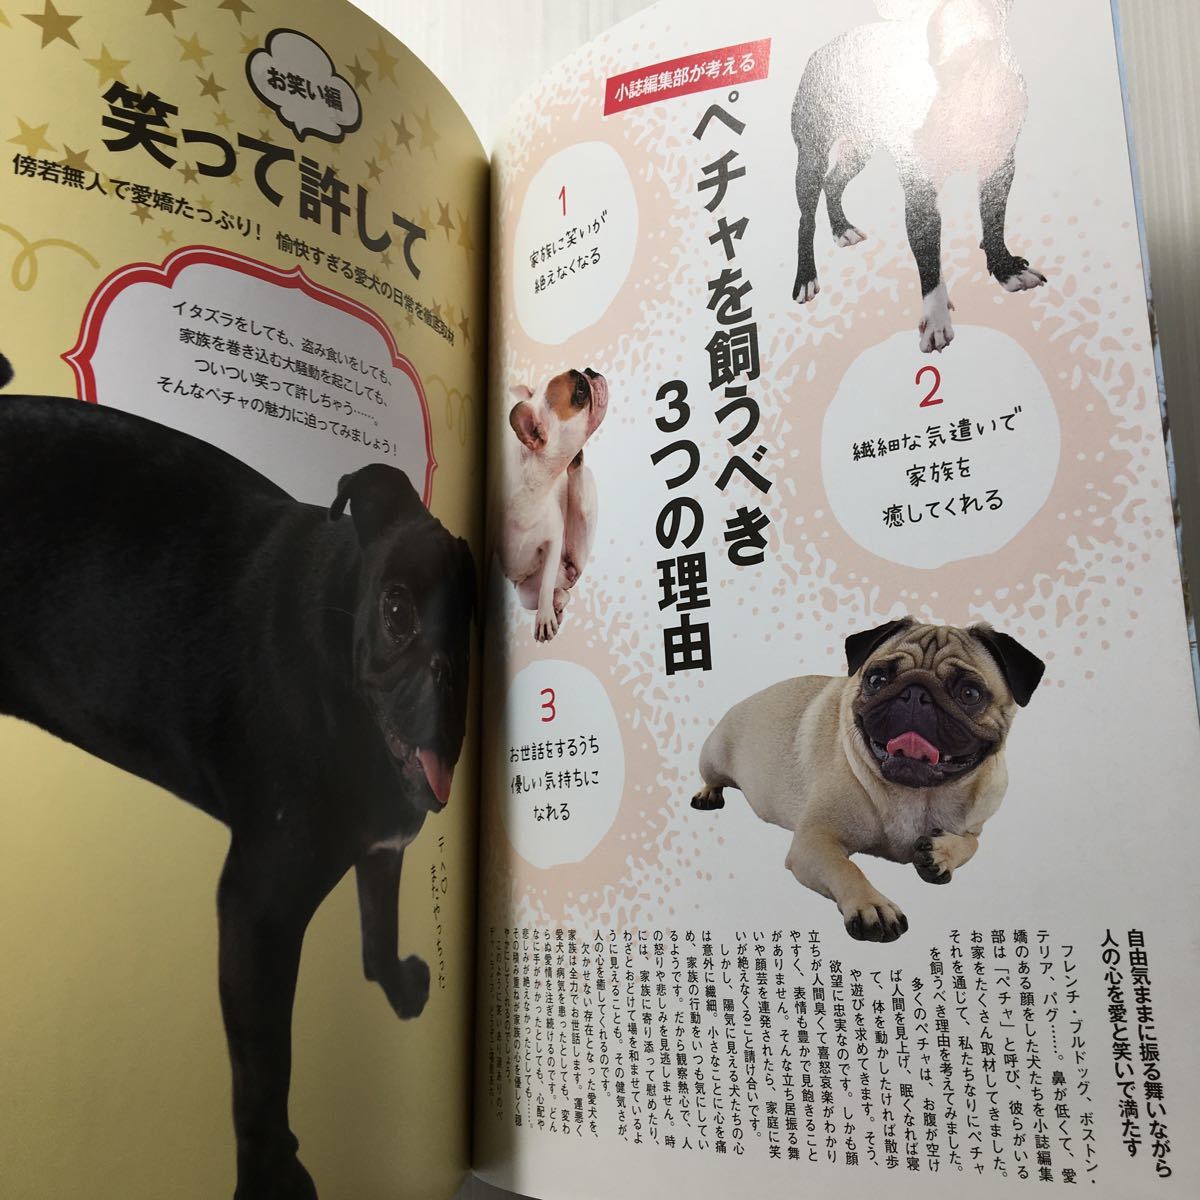 zaa-169!PE*CHA Vol.19 (ta loading Mucc ) nose pe.. dog speciality magazine 2016/10/31f Rebel * Pug * Boss telietc